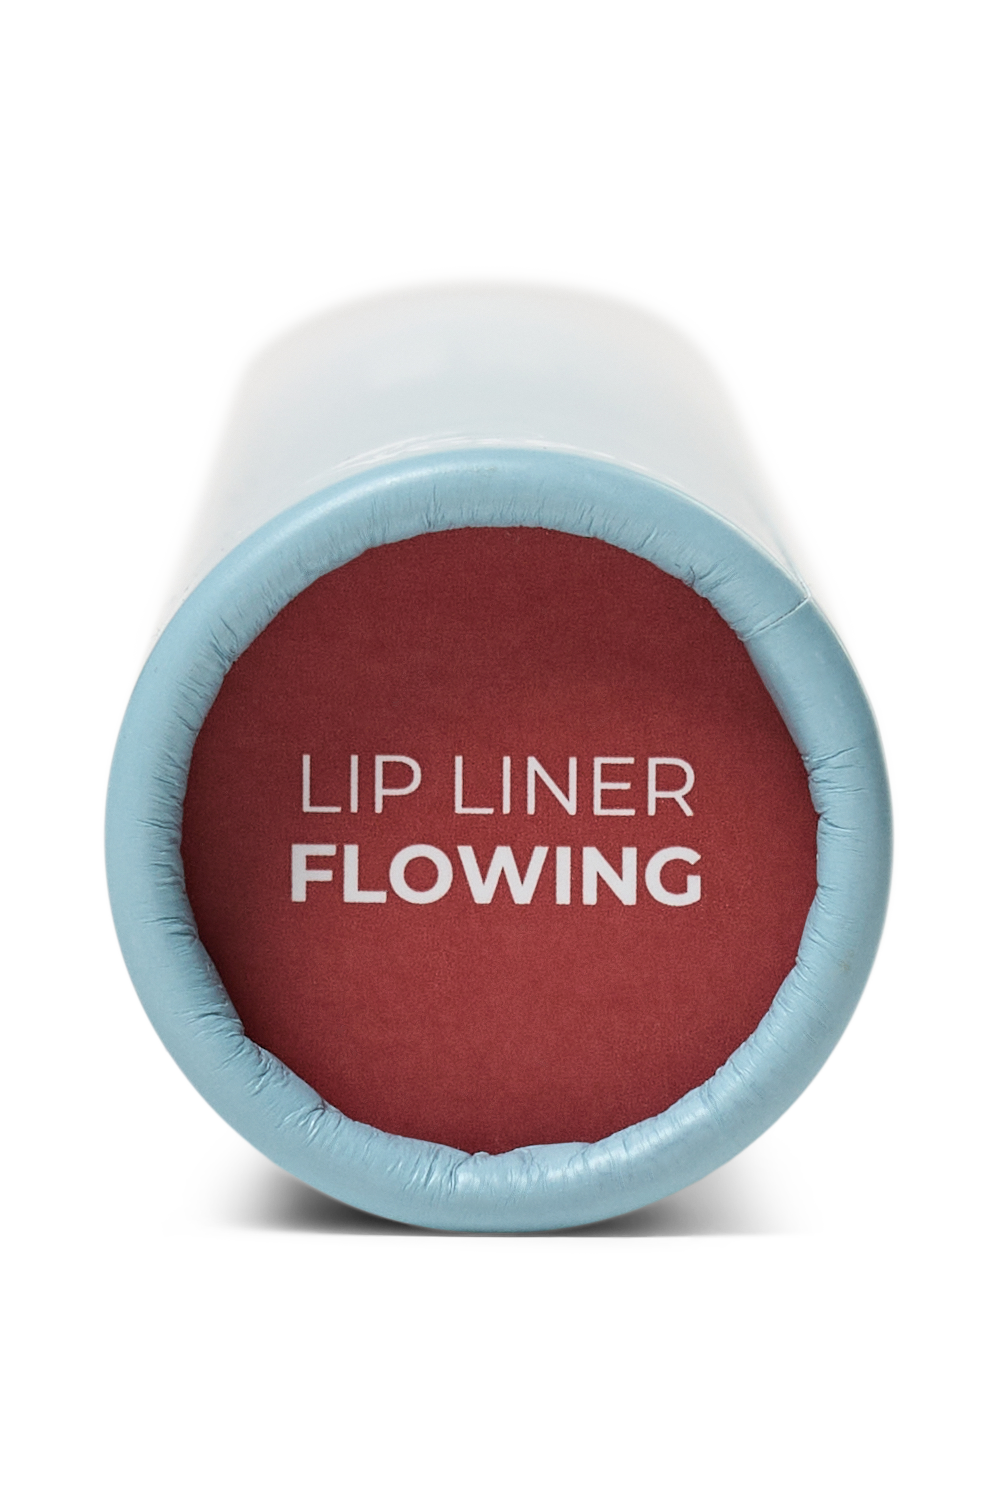 Coastline lip liner - Flowing